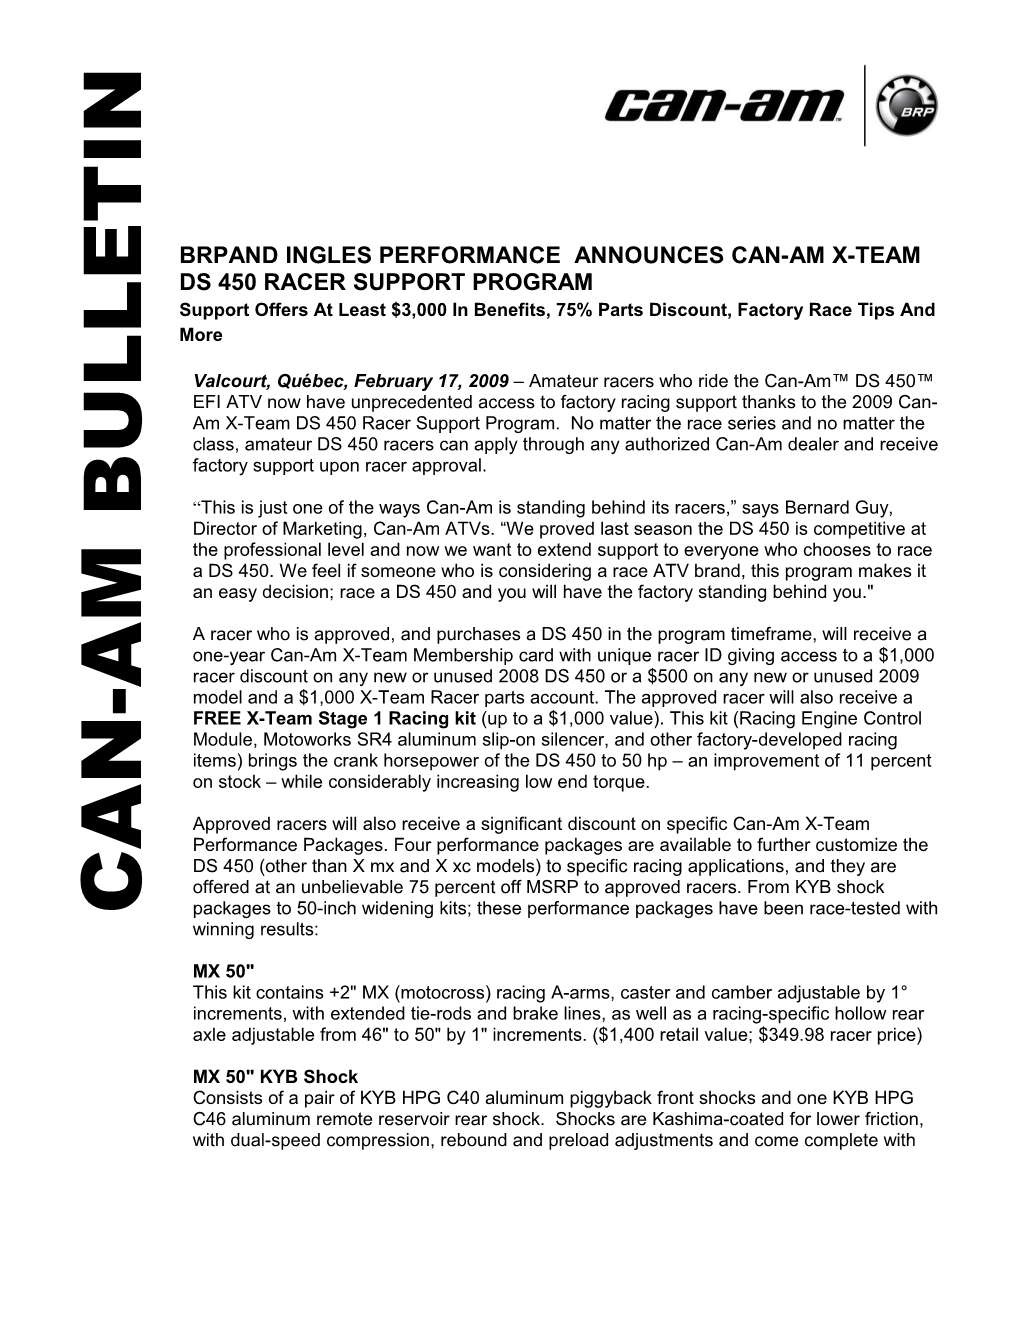 Can-Am Bulletin